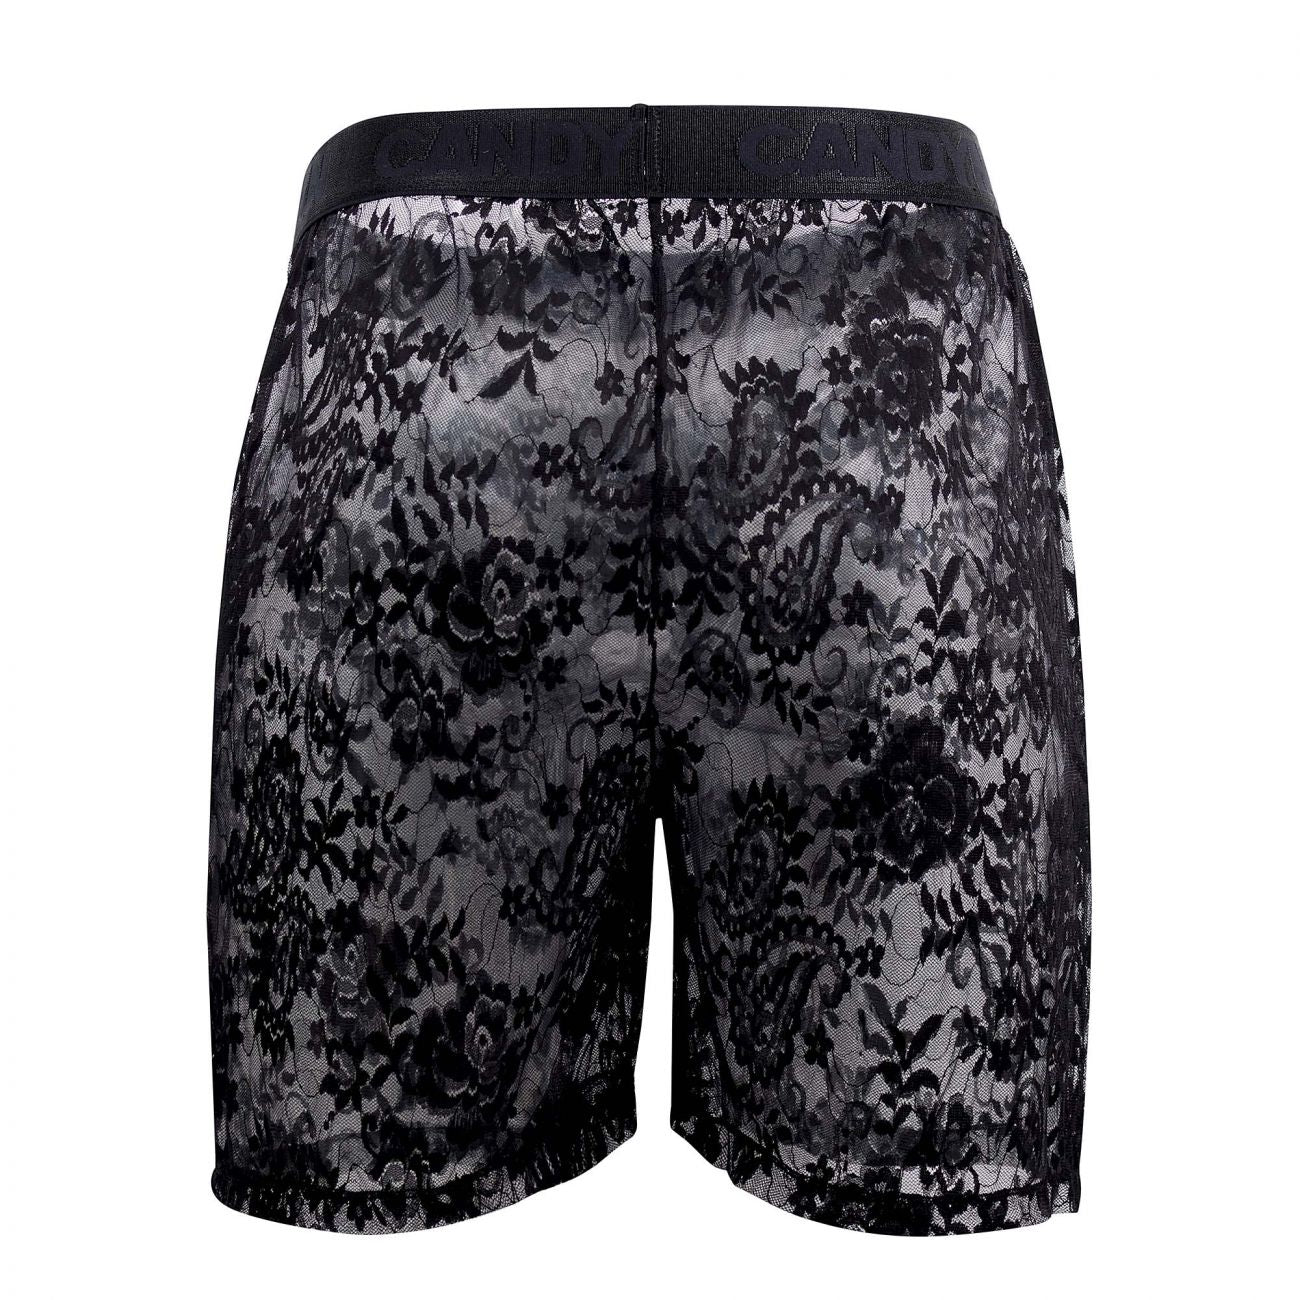 CandyMan 99464X Lace Shorts Black Plus Sizes